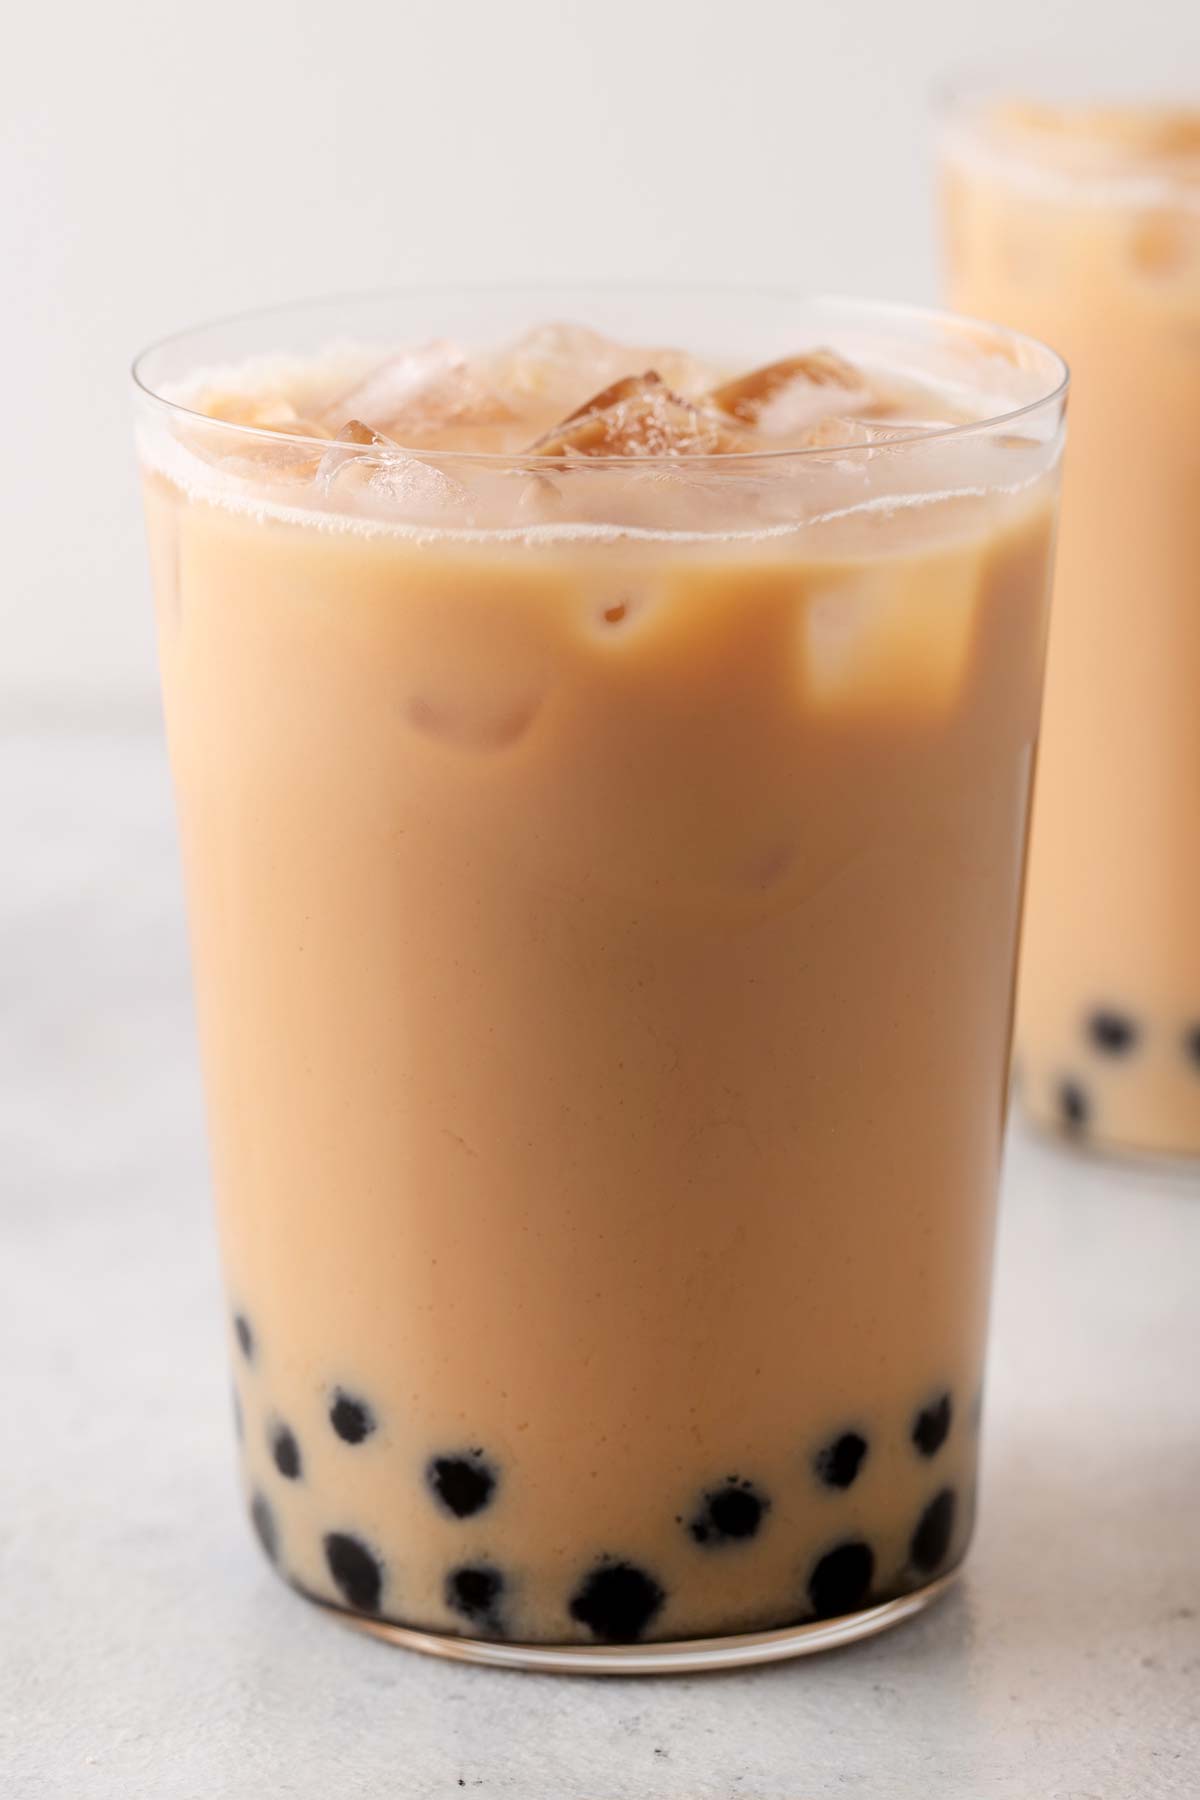 A ready to drink Hong Kong Milk Tea (Hong Kong Bubble Tea) in a tall, clear glass.
